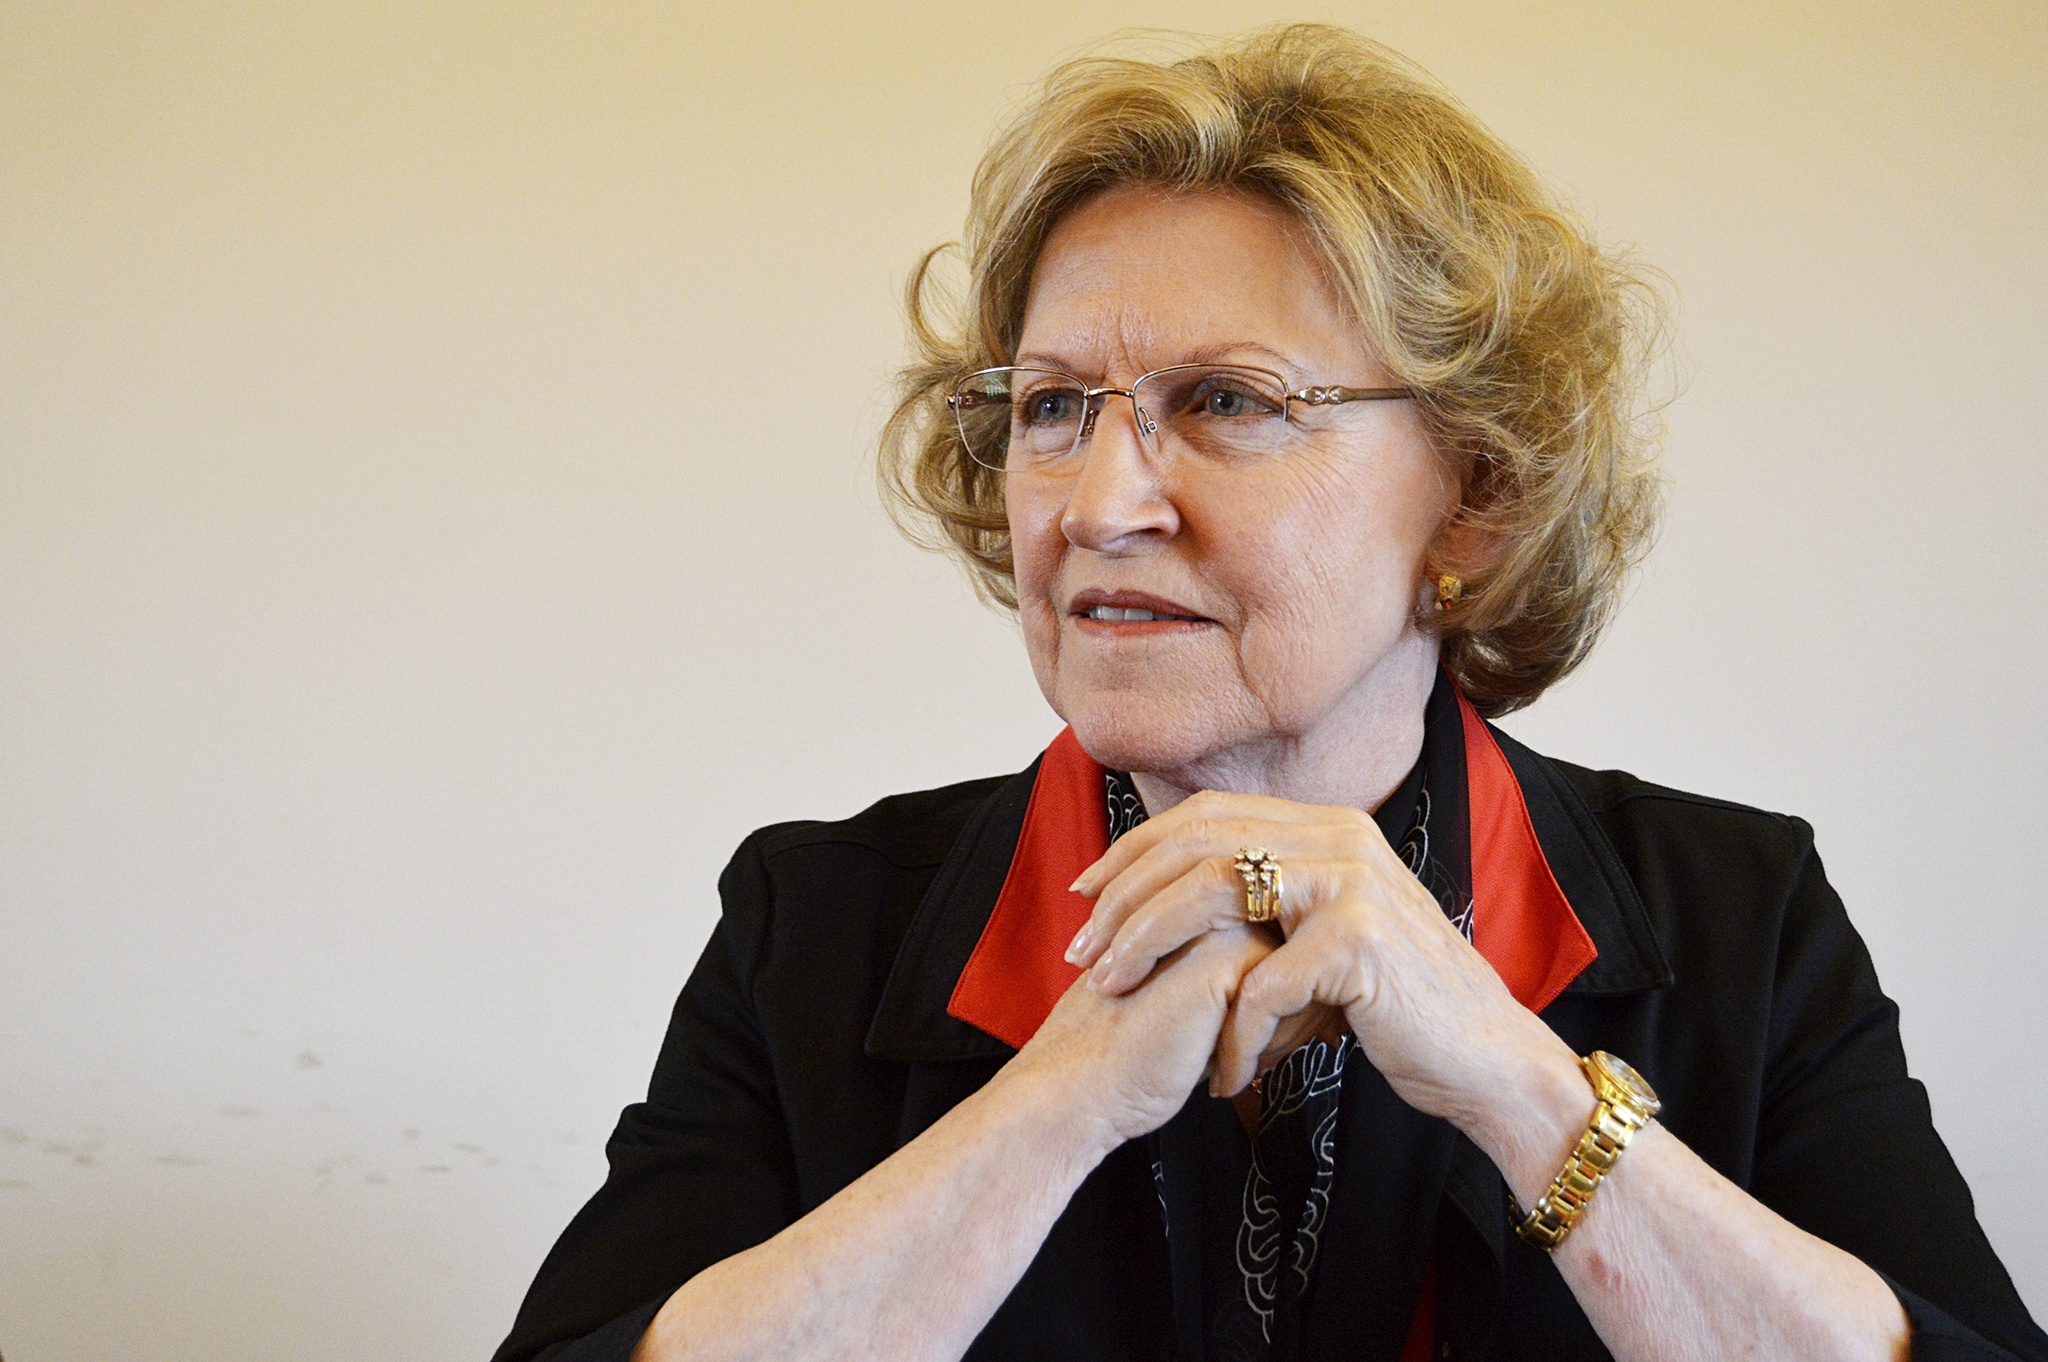 State Sen. Barbara Bailey discusses her legislative priorities if reelected in November.